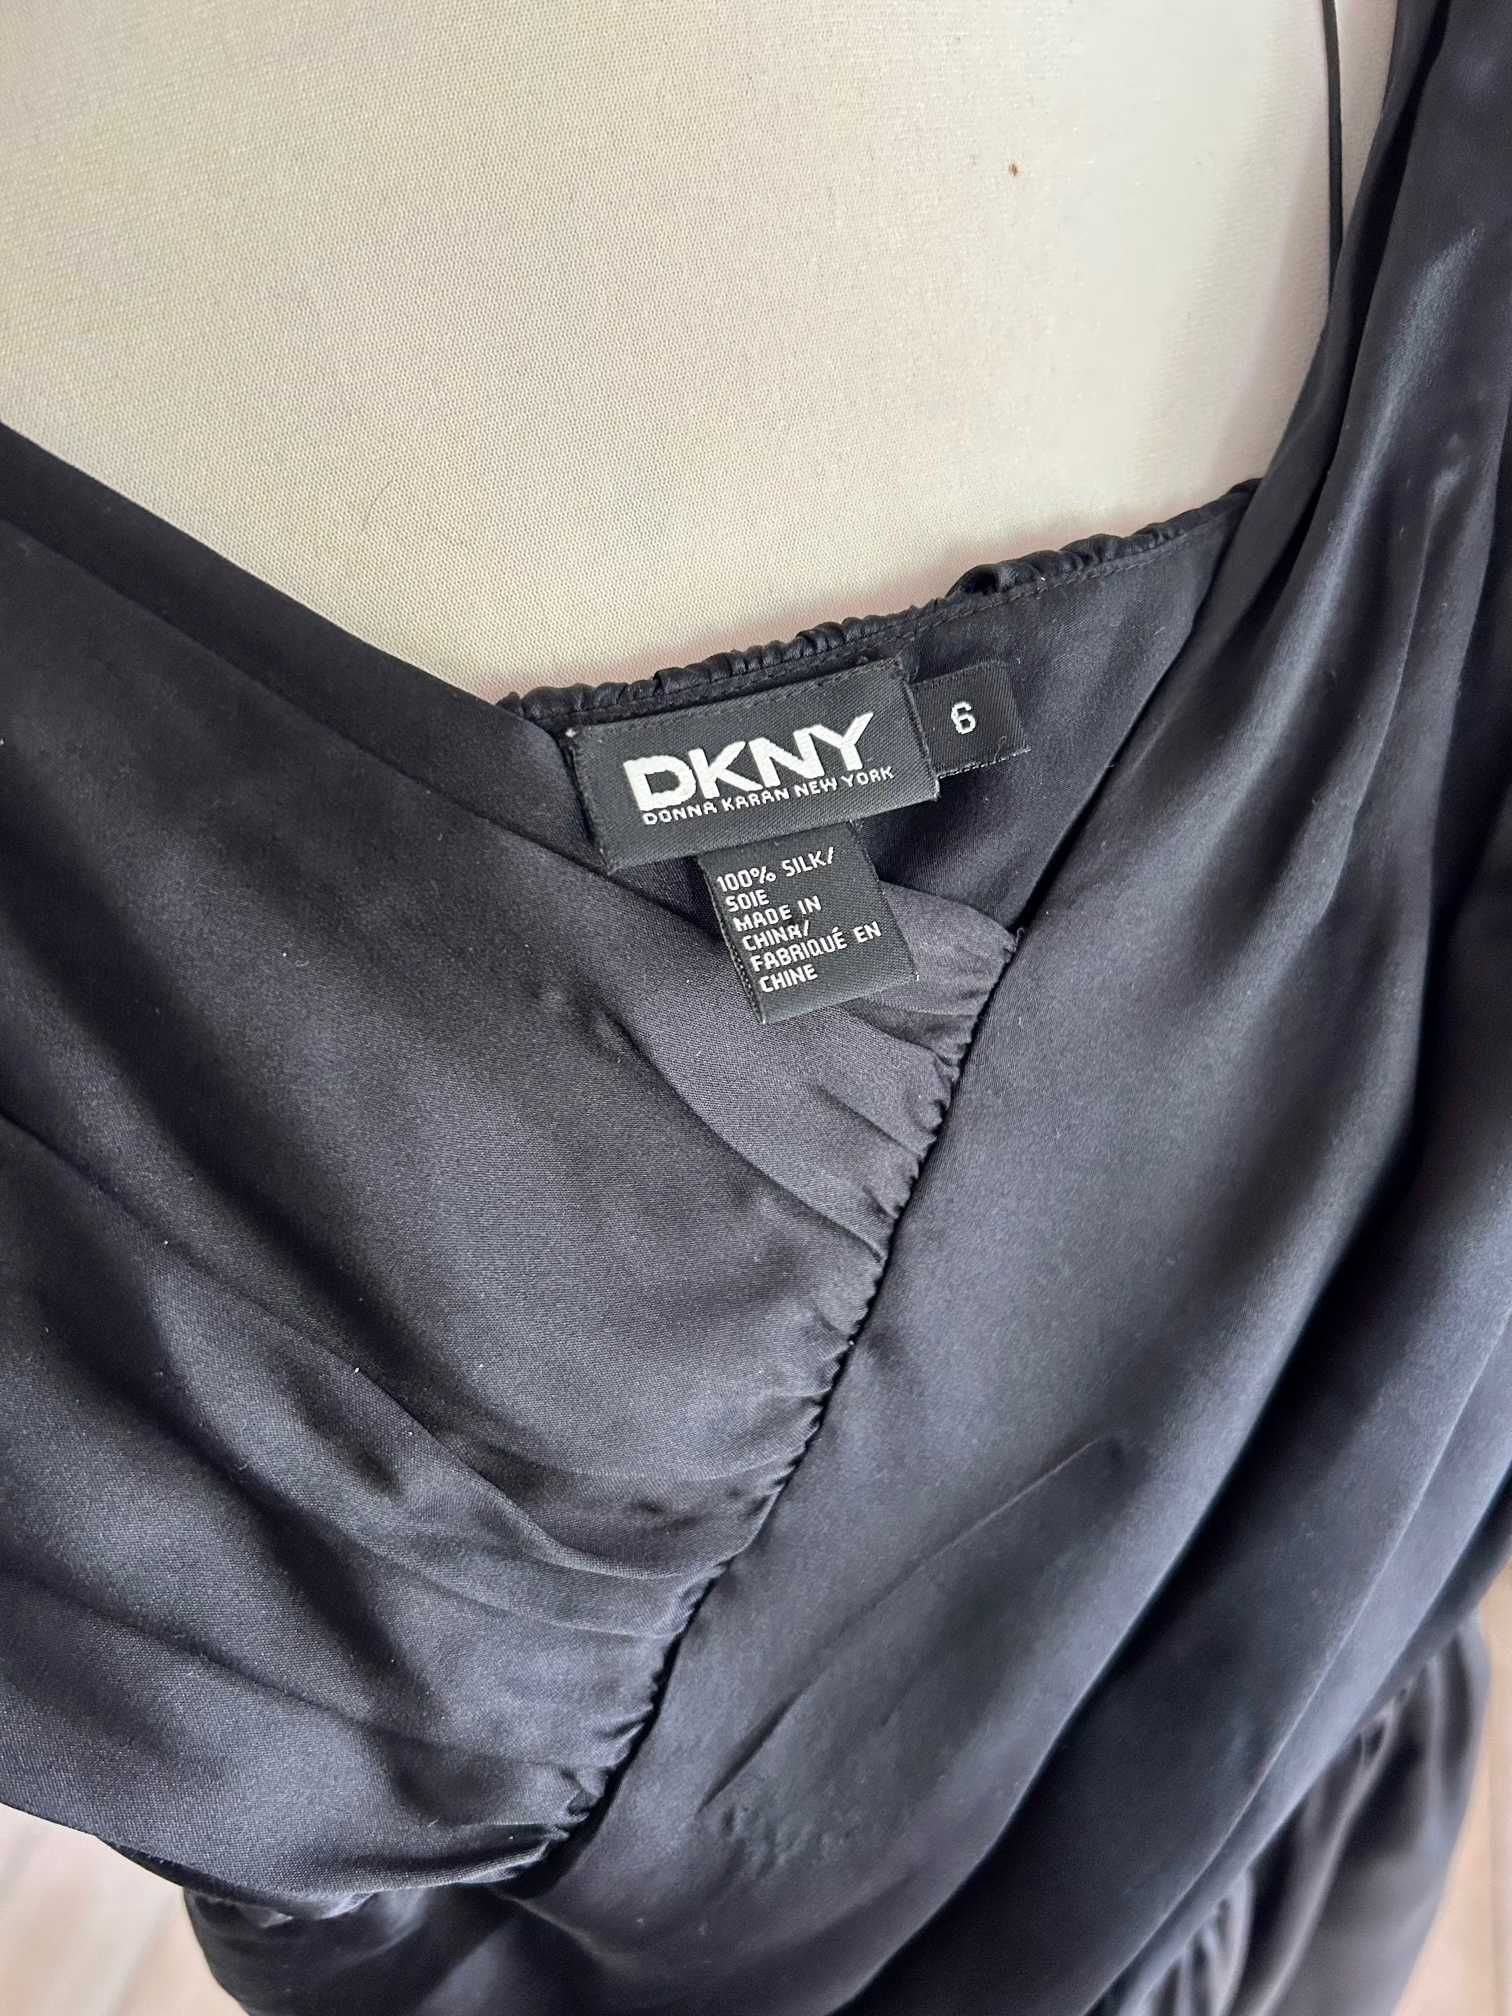 Donna Karan jedwab 100% drapowana maxi slippery dress suknia